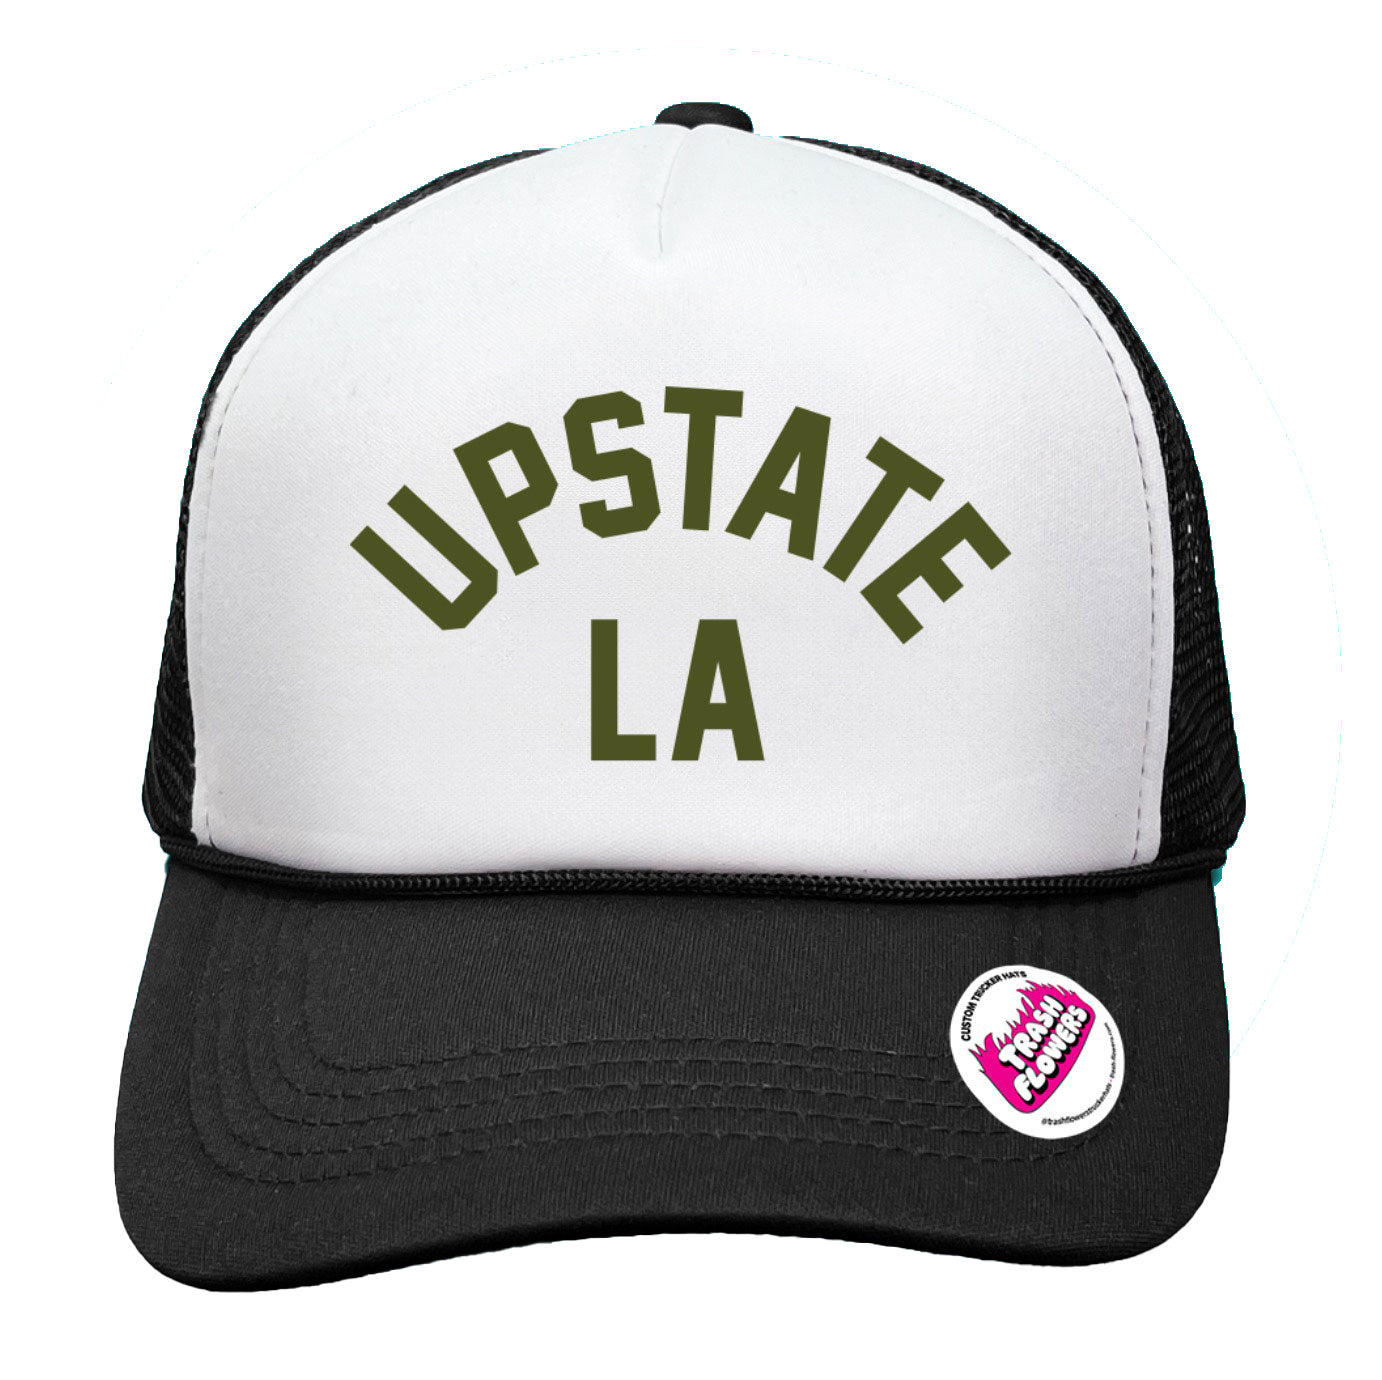 Upstate LA Hat